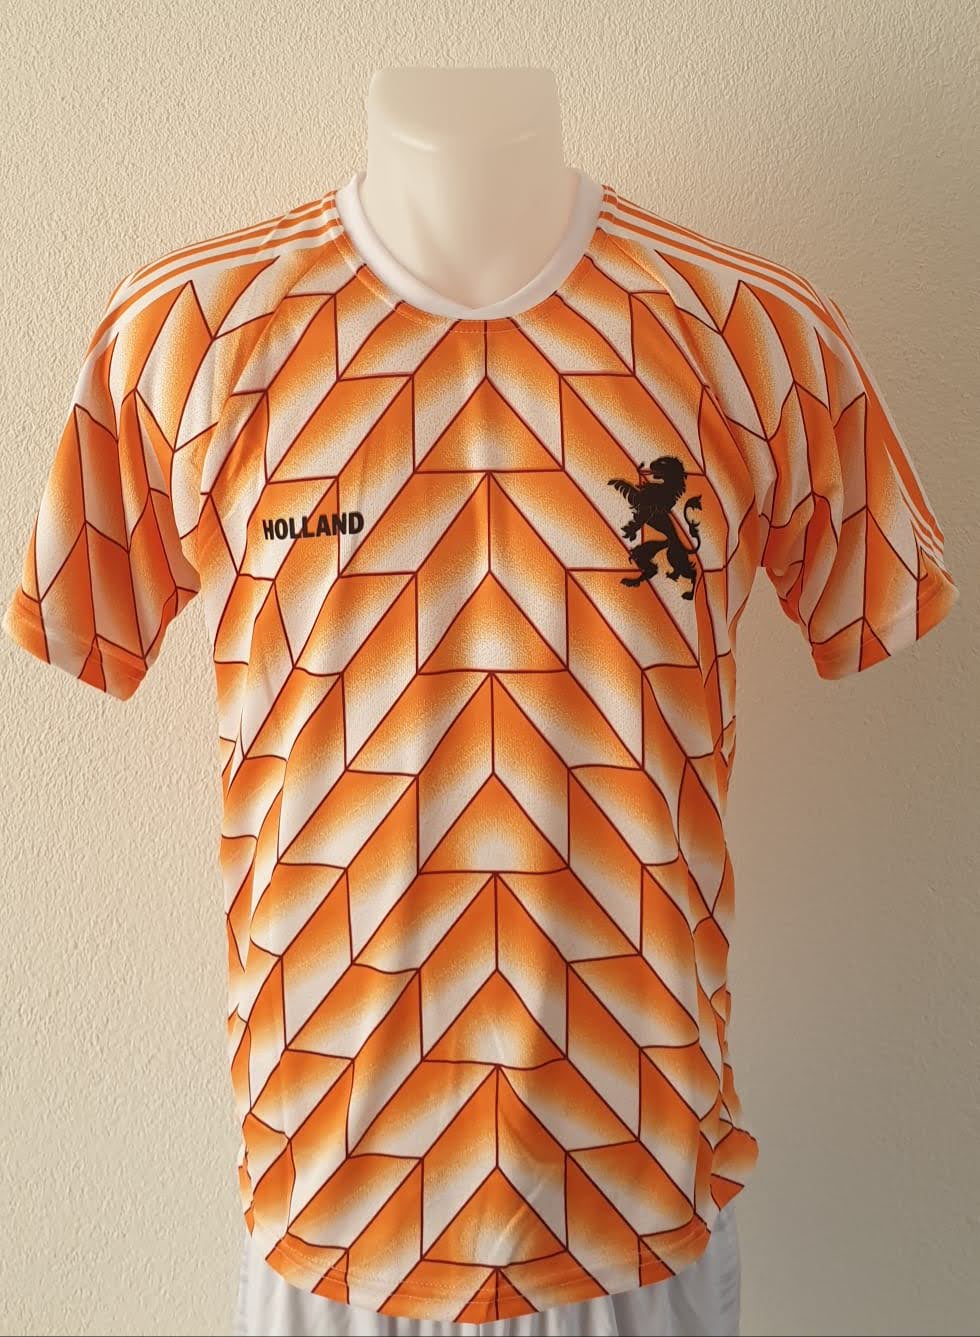 Binnenshuis Goodwill laden Nederlands Voetbalshirt EK 88' Thuis - Voetbalshirt-tenue